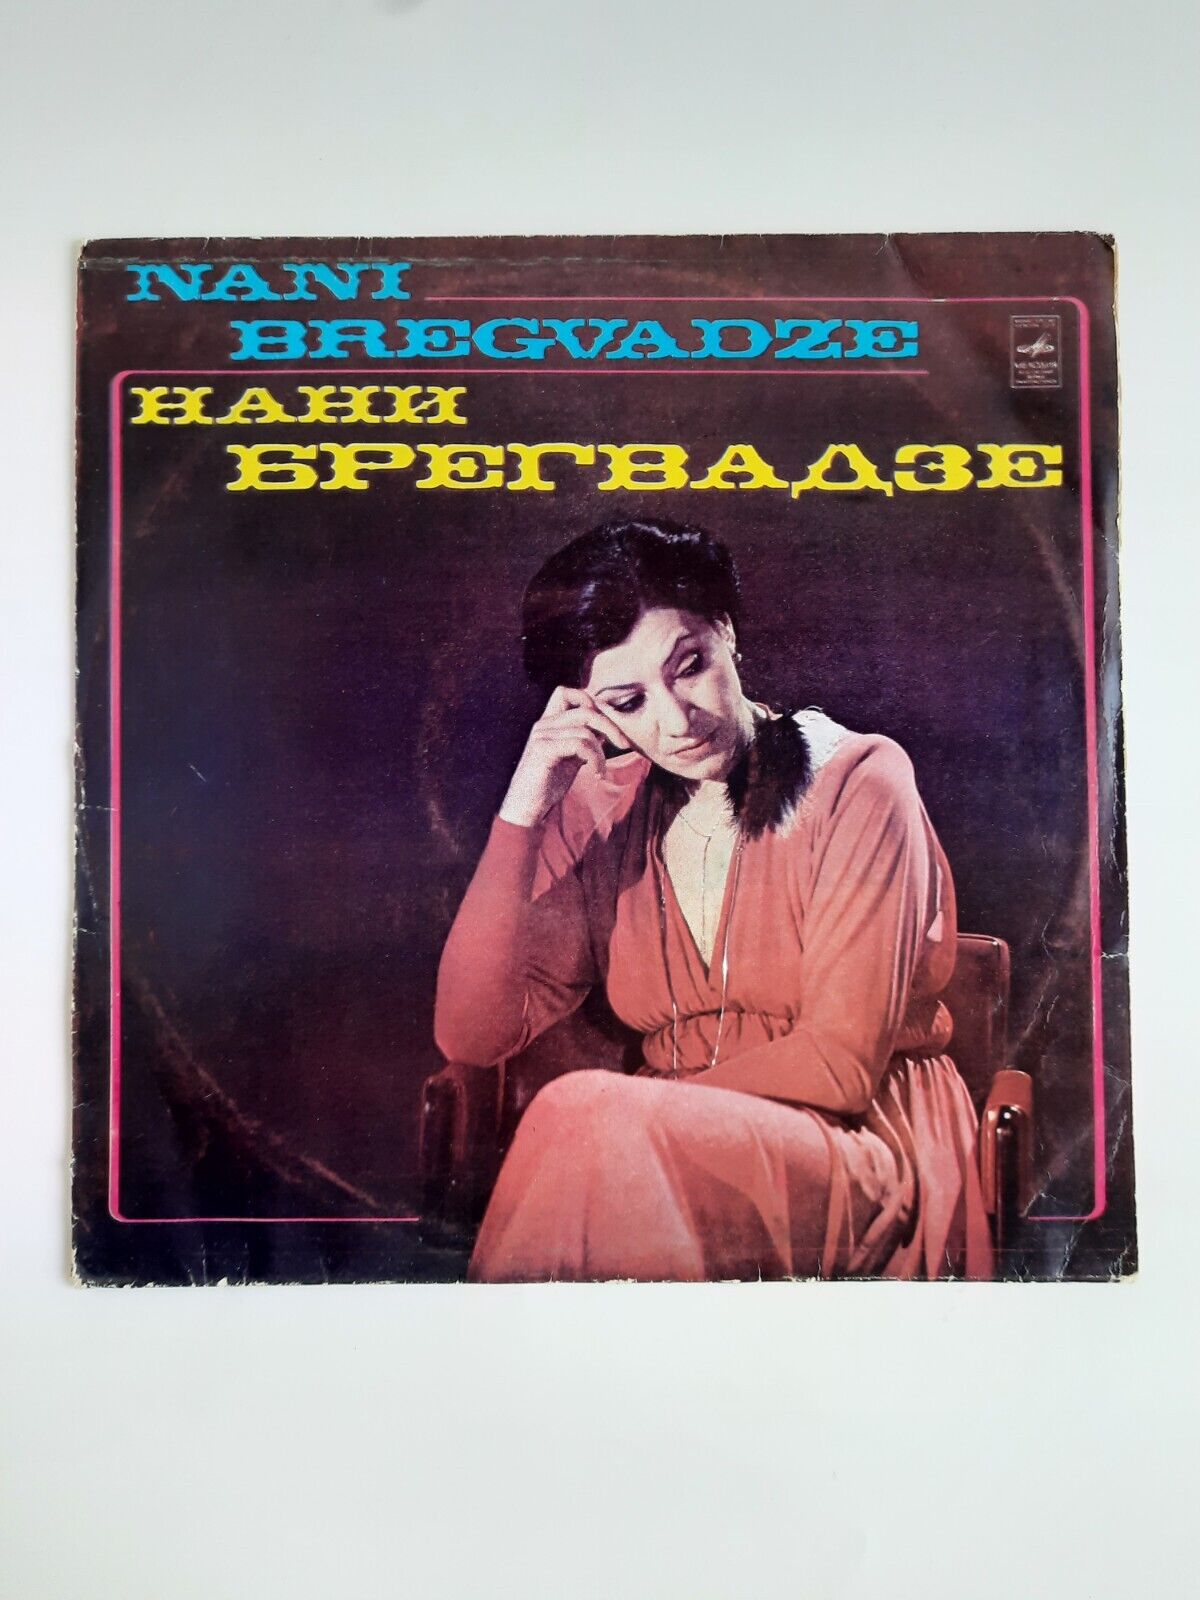 Nani Bregvadze - Vinyl Record LP, Georgian singer + VIDEO